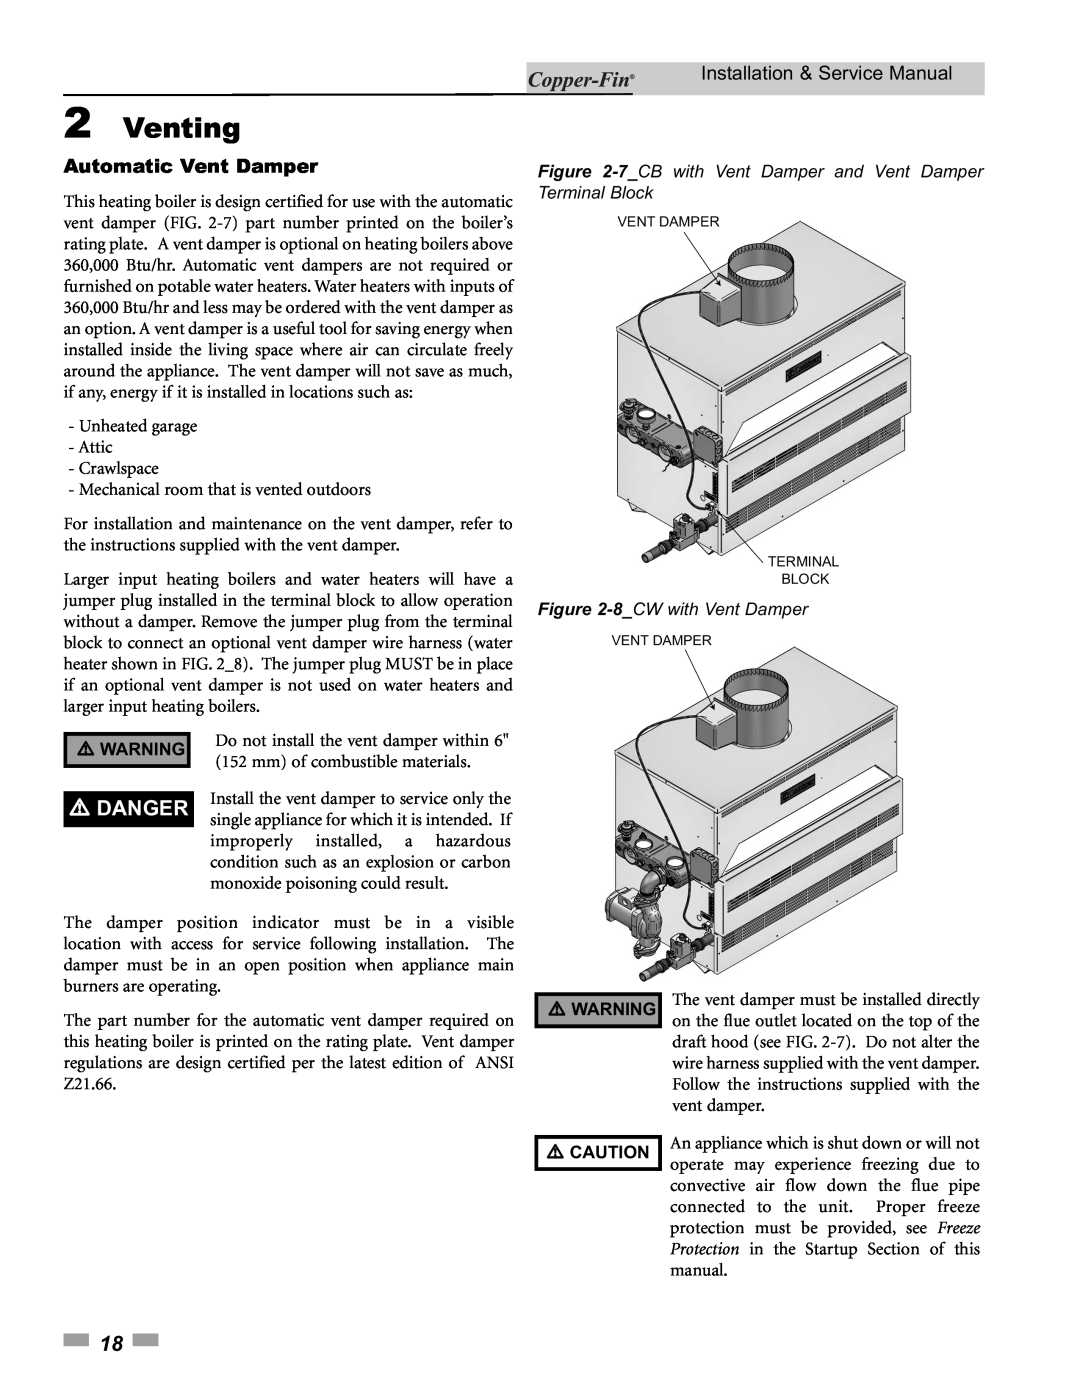 Lochinvar 500, 90 Automatic Vent Damper, 2Venting, Danger, Installation & Service Manual, 8_CWwith Vent Damper 